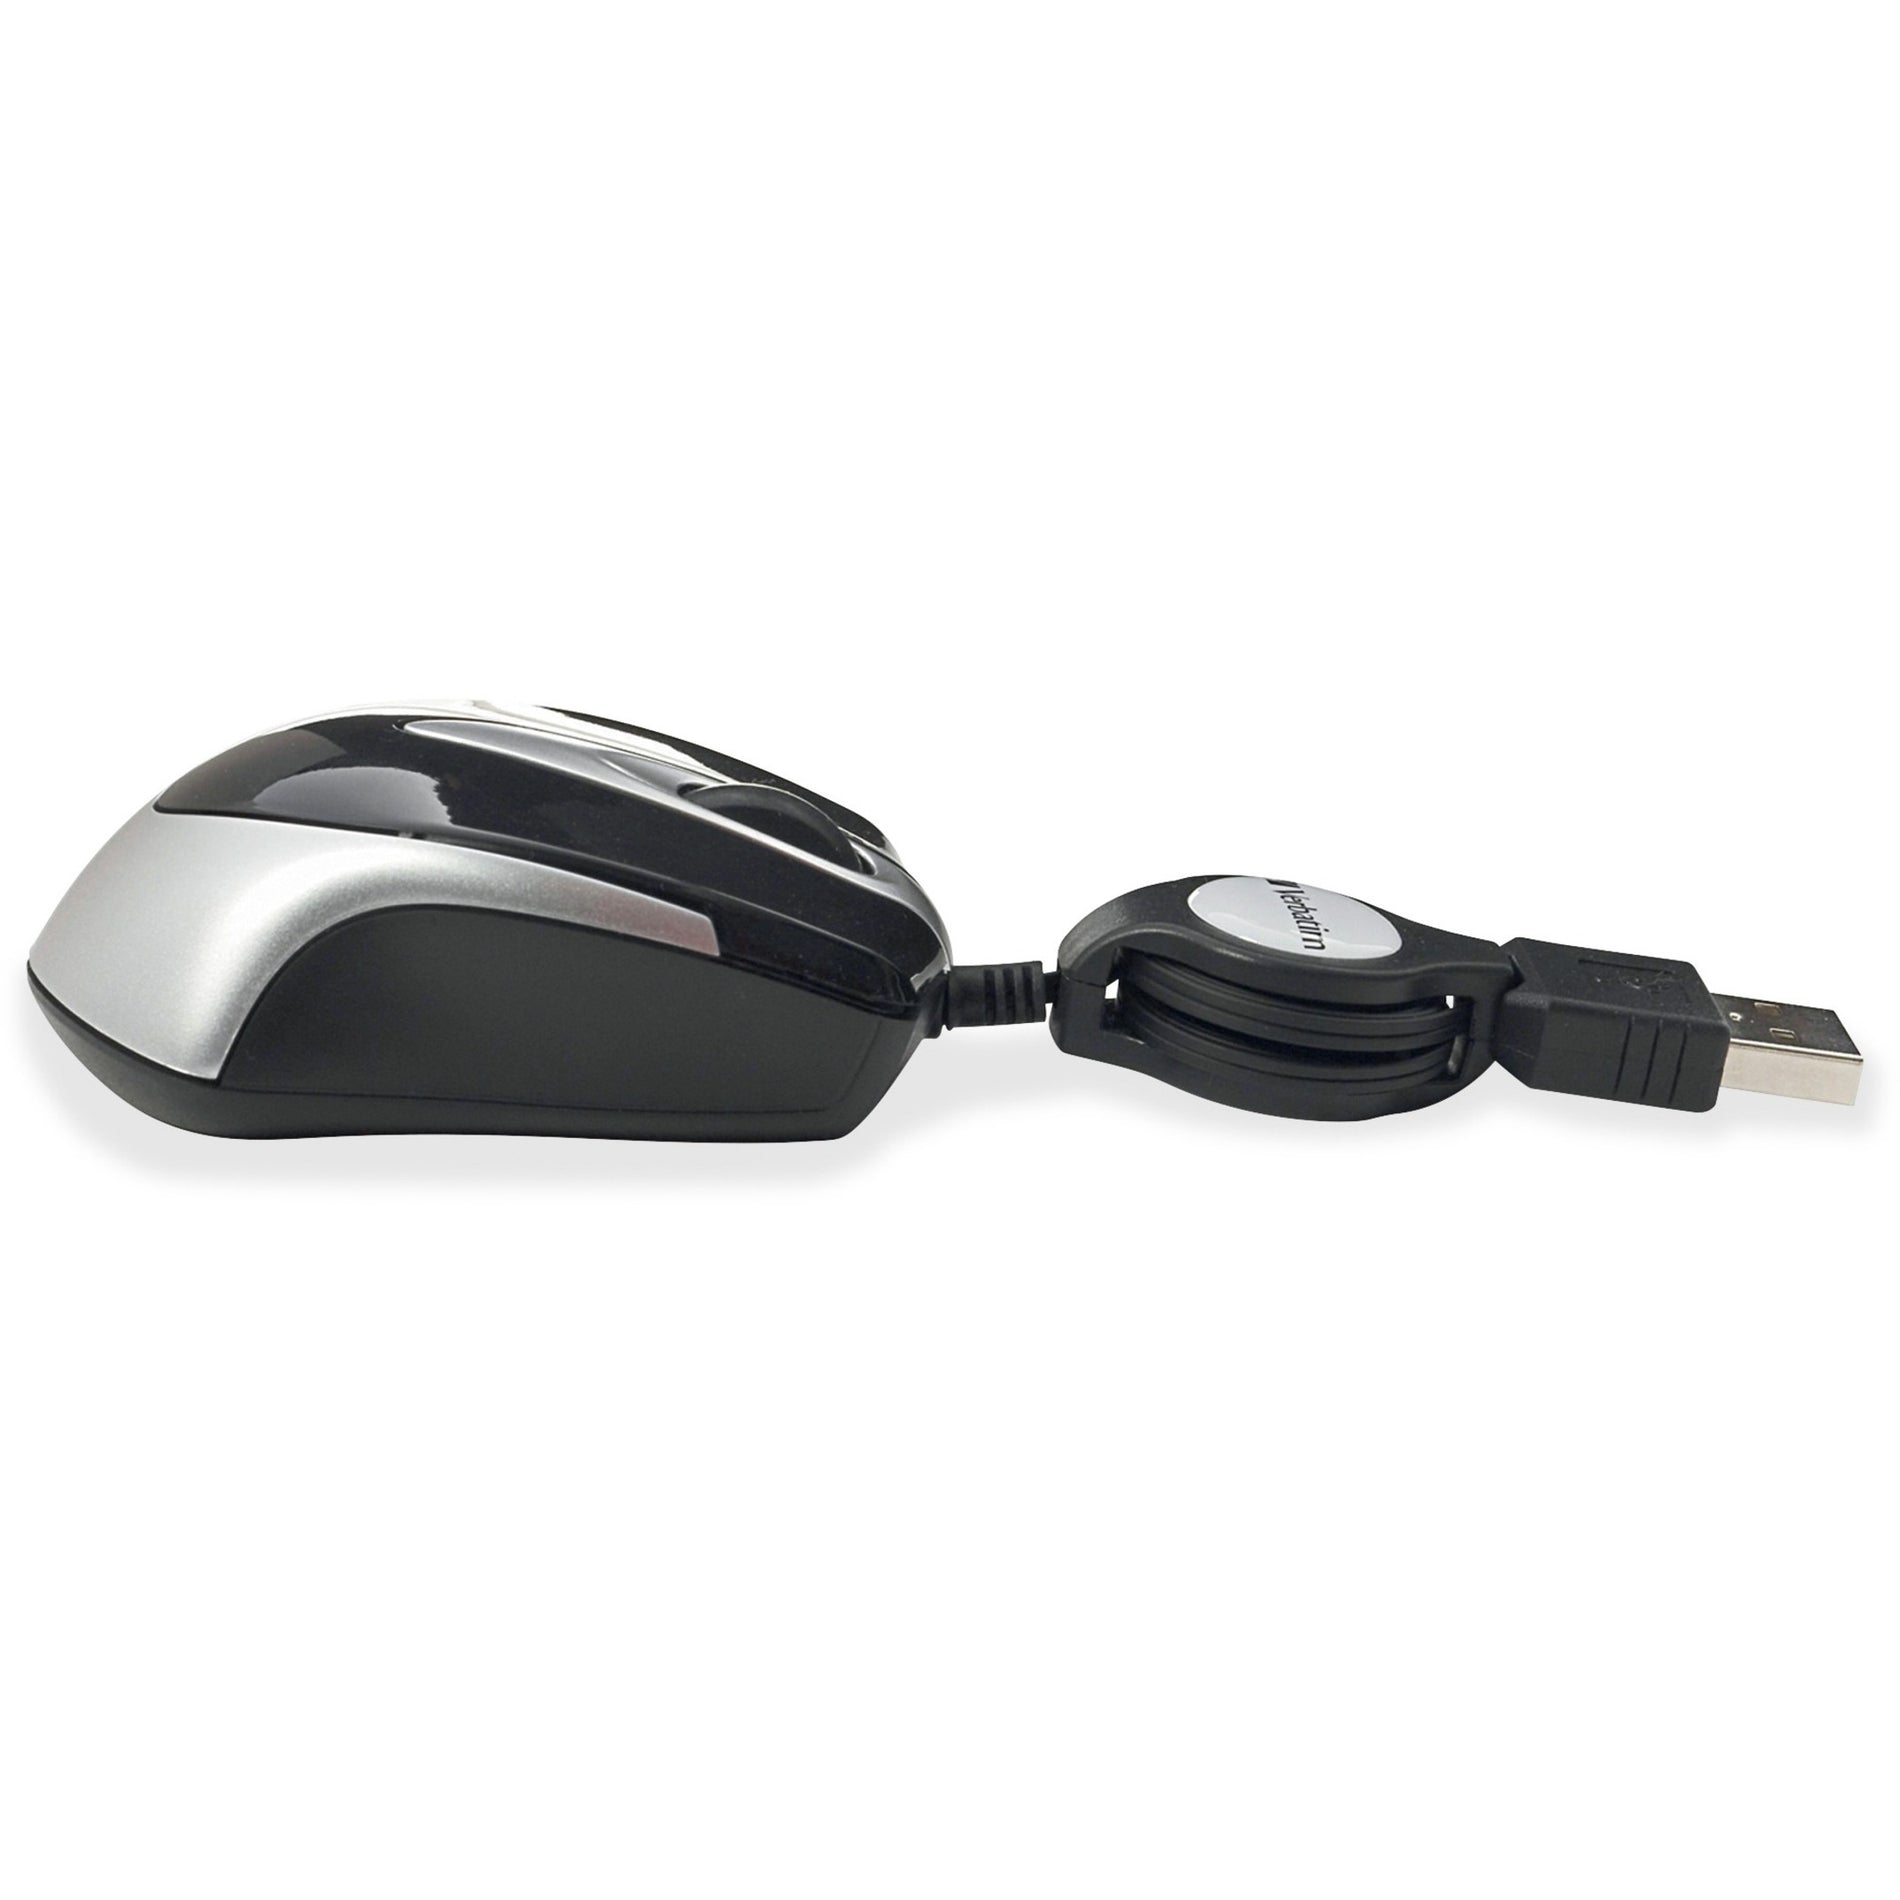 Verbatim 97256 Optical Travel Mouse, Black, 1000 dpi, USB